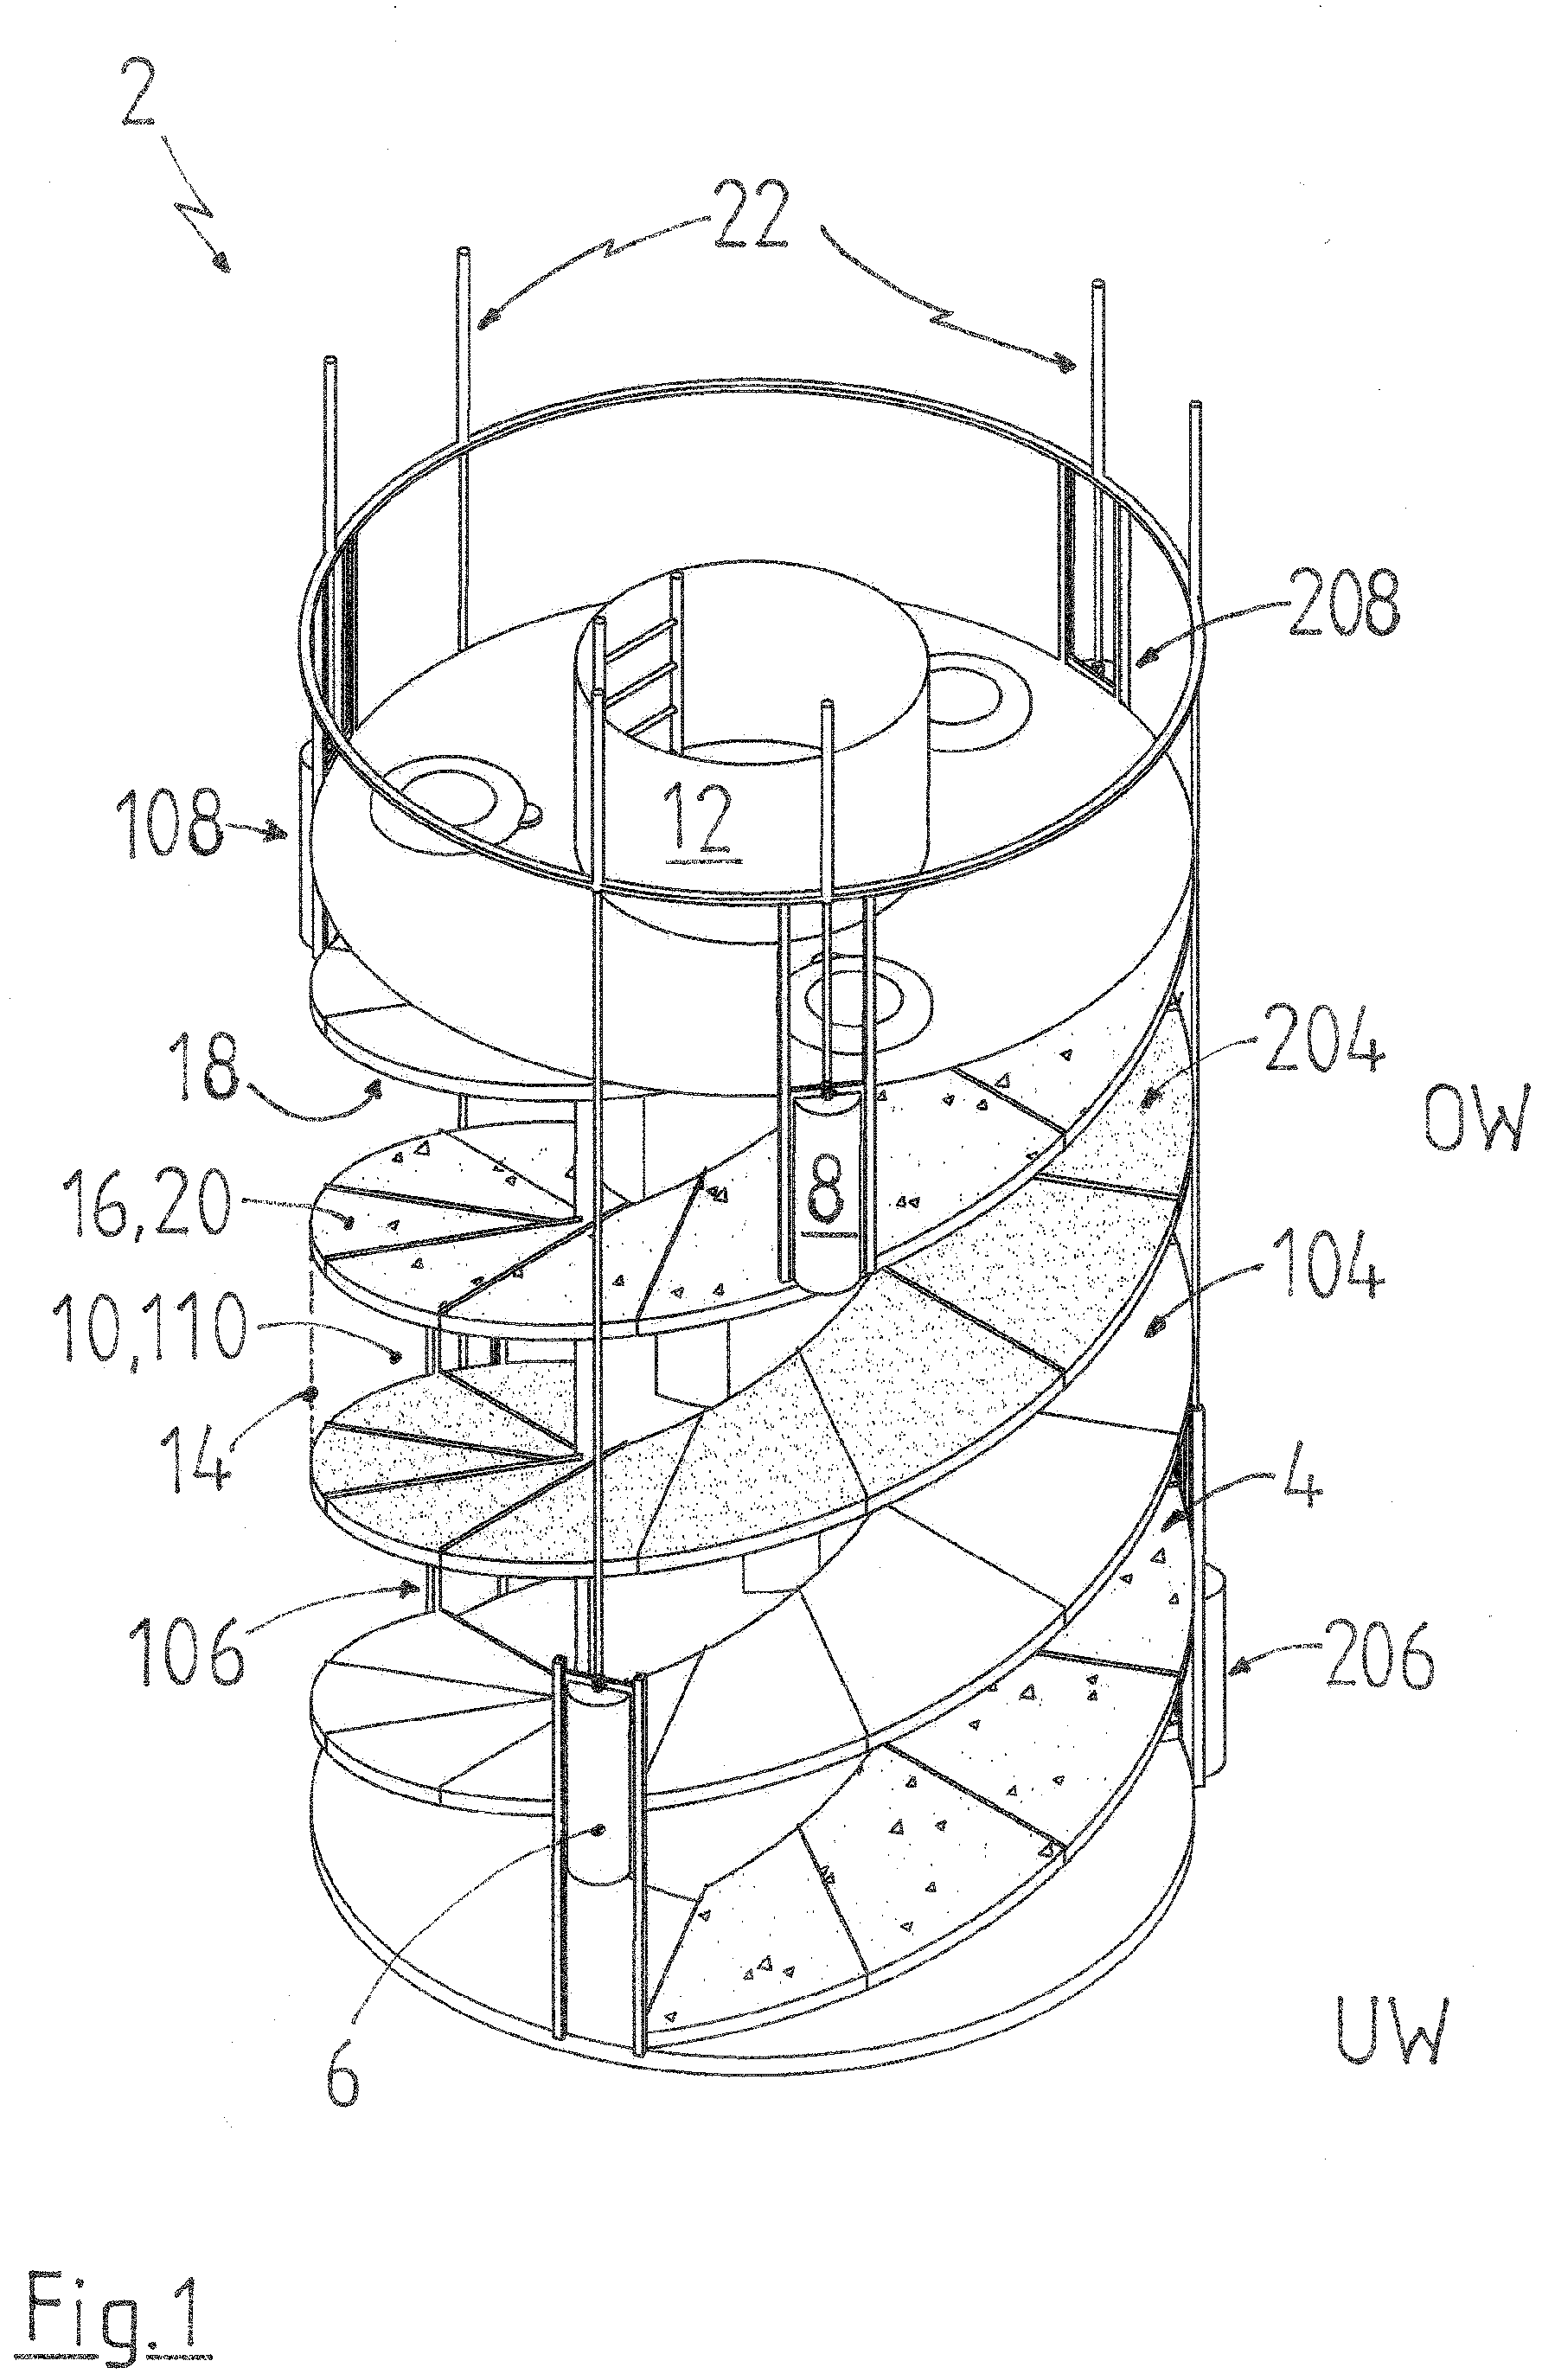 Fish ladder patent image